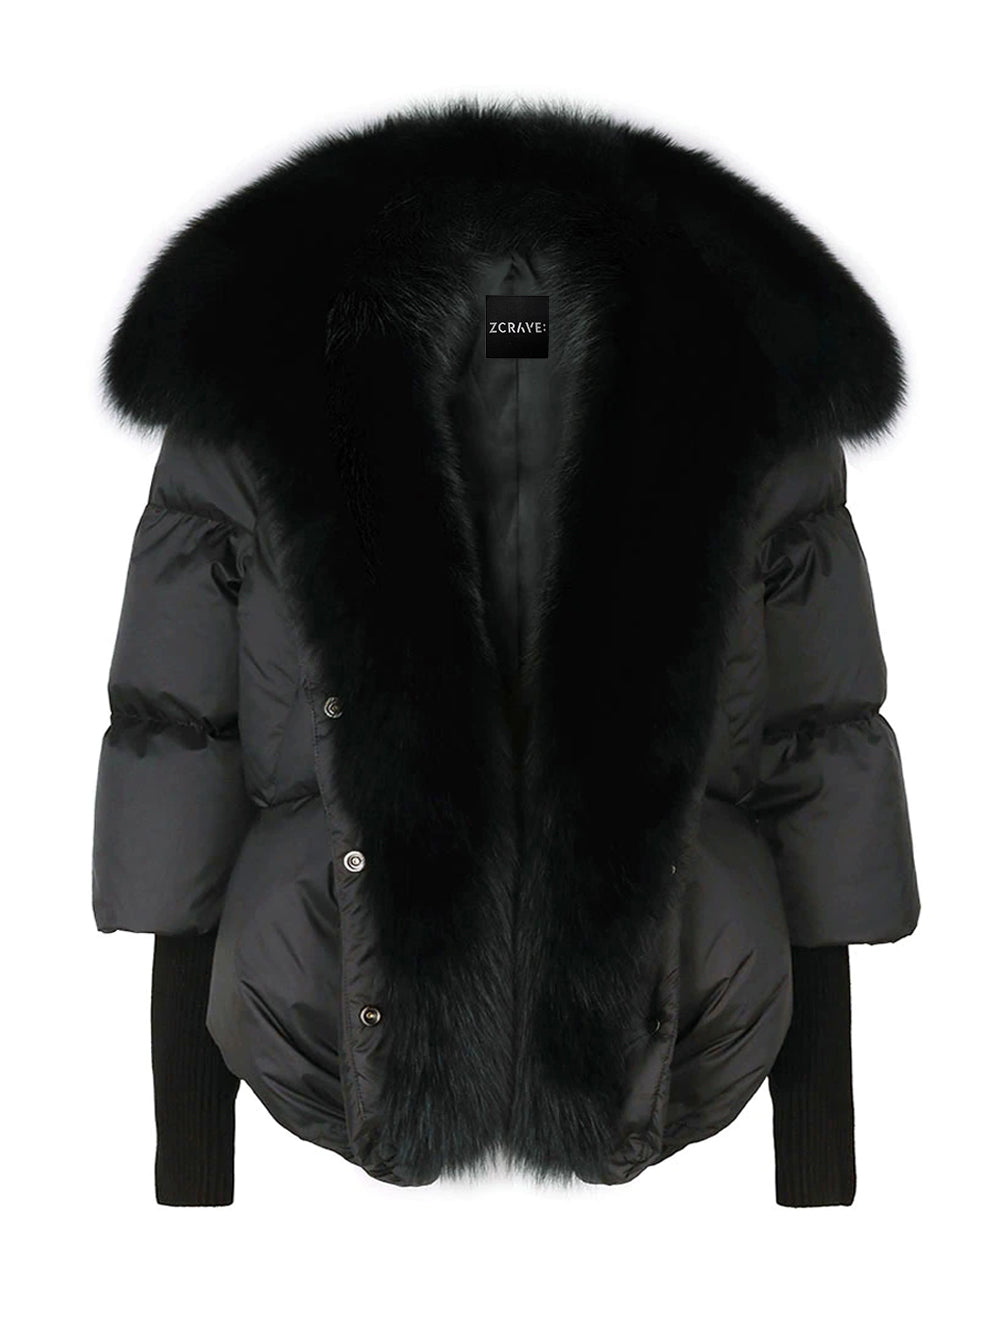 Fur Trim Puffer Jacket in Black PTG 